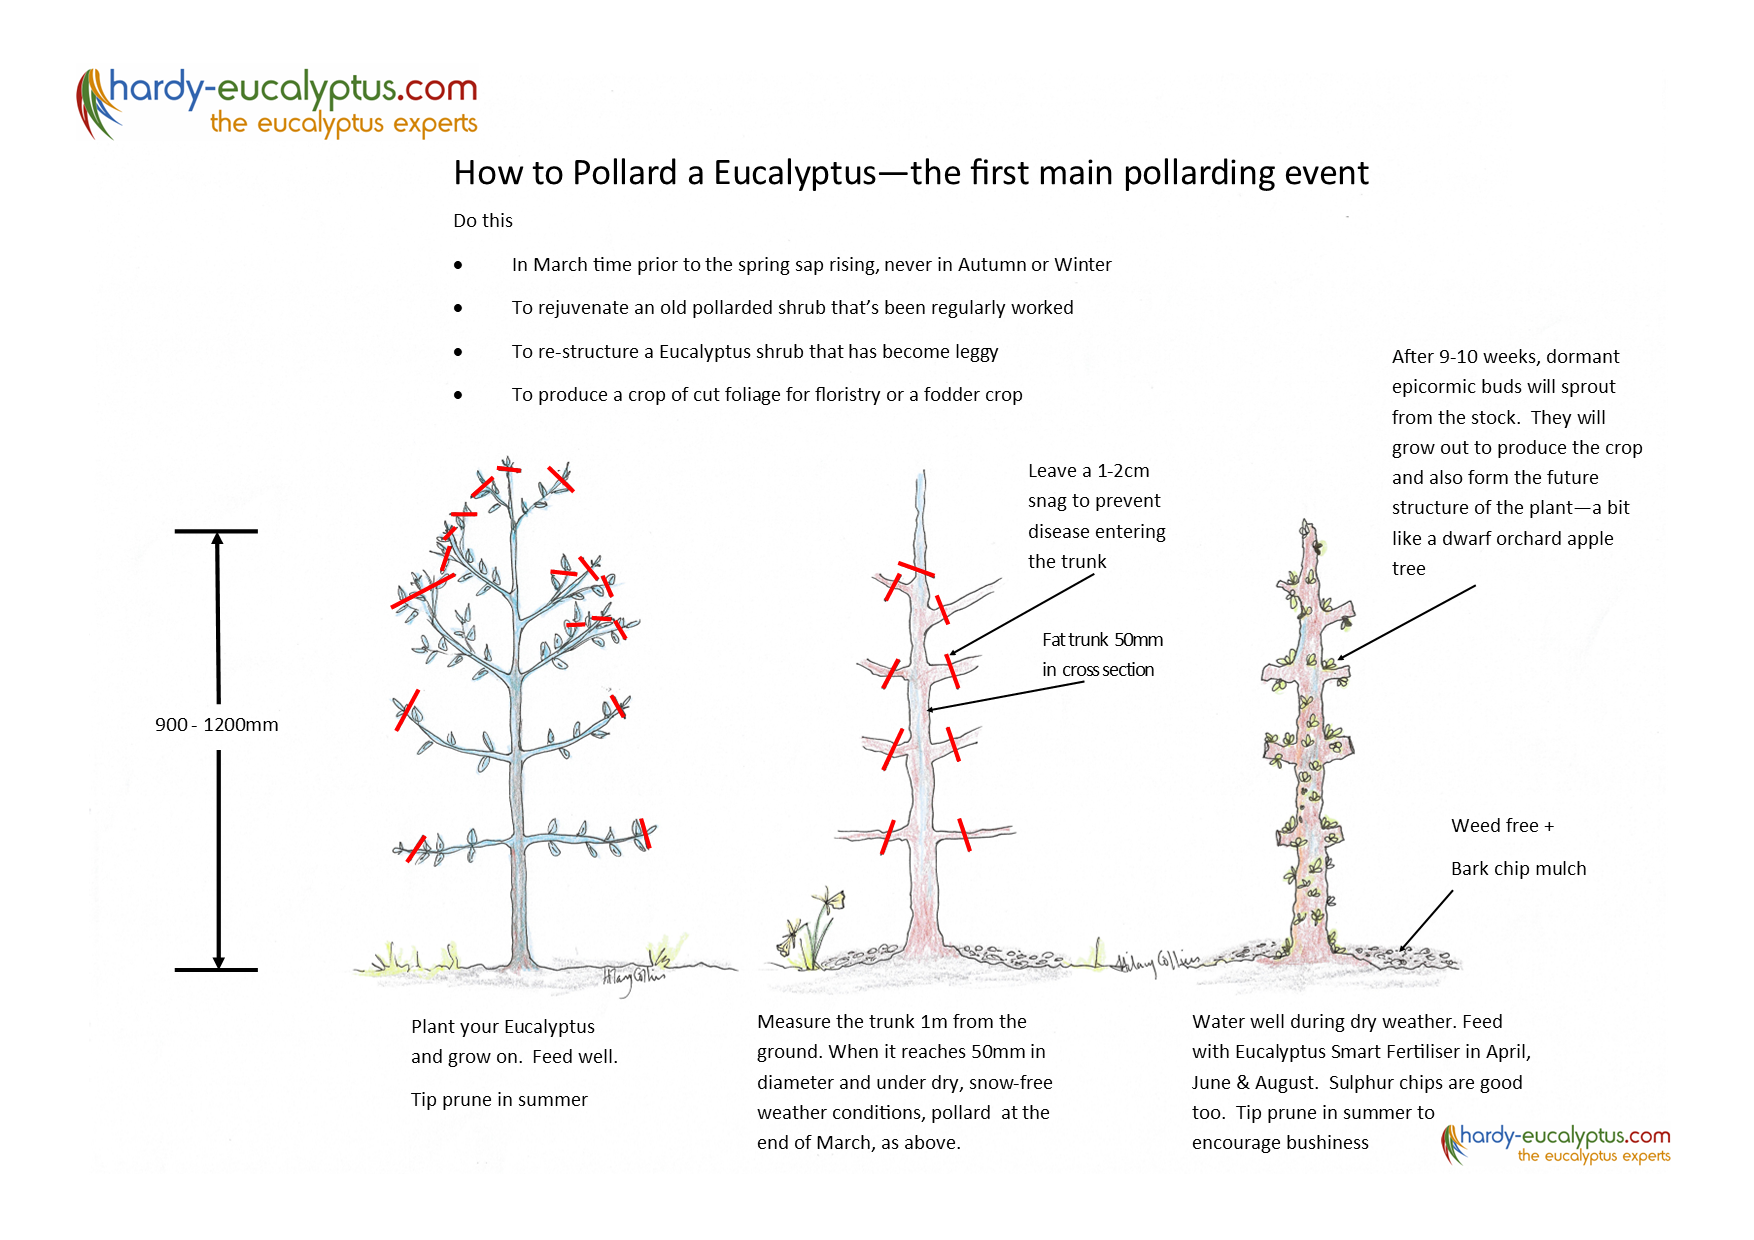 How to pollard a Eucalyptus tree